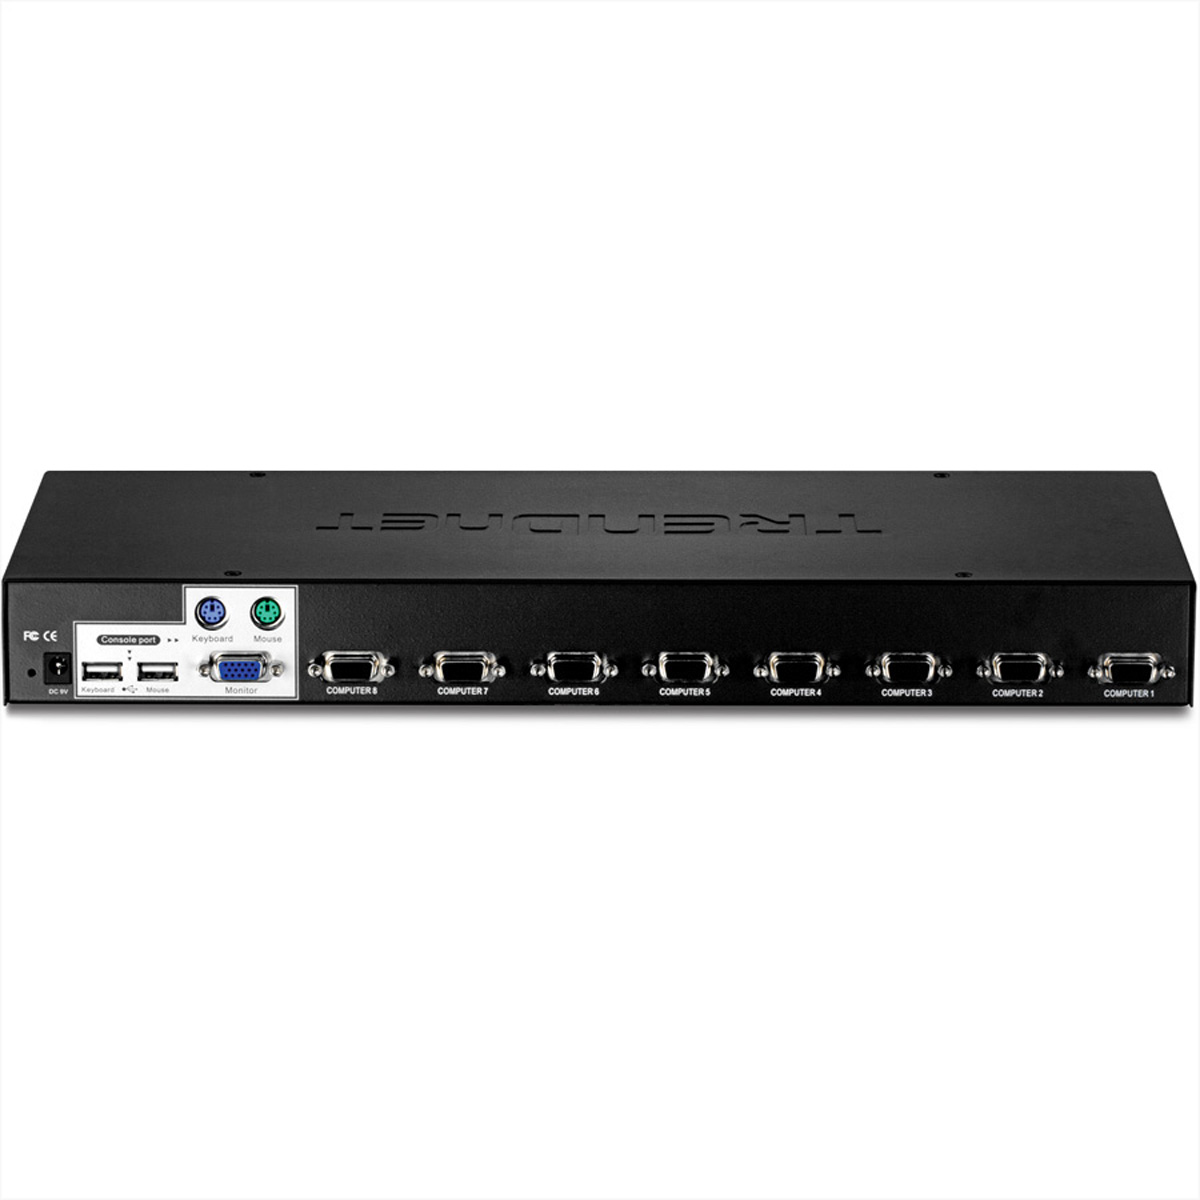 TK-803R USB/PS/2 Mount KVM TRENDNET 8-Port Rack Switch Tastatur/Video/Maus (KVM)-Switches